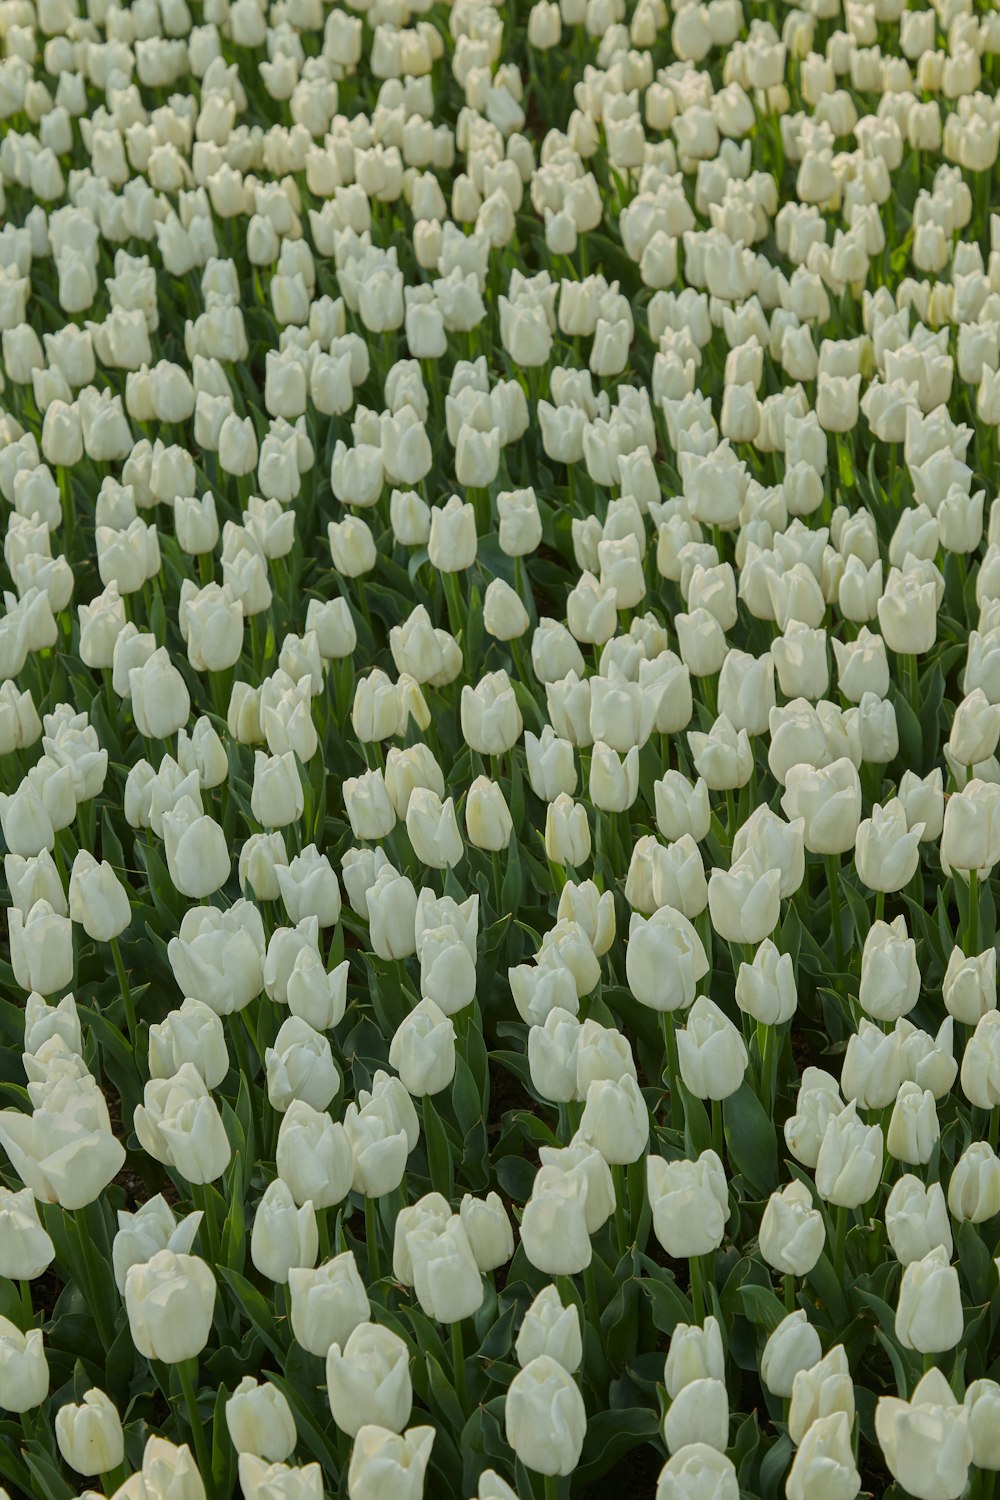 a field of white tulips in a garden